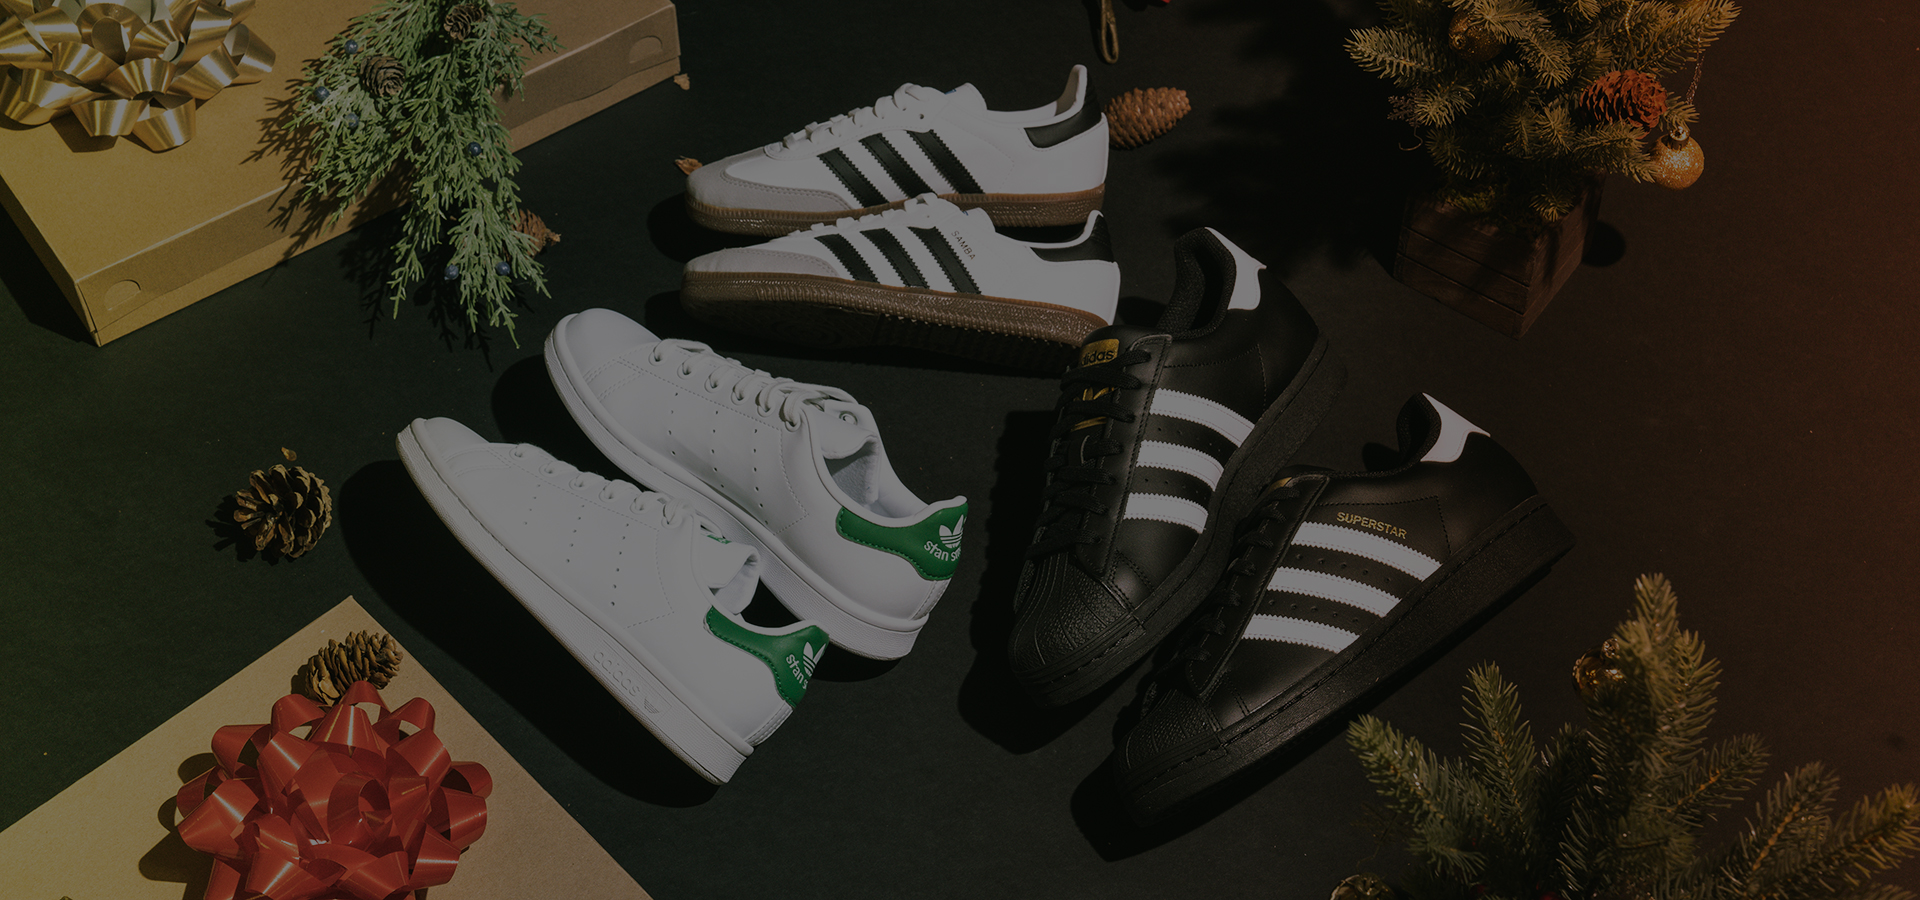 Shop Classic adidas For Gift-Giving Season 2022 | SneakerNews.com